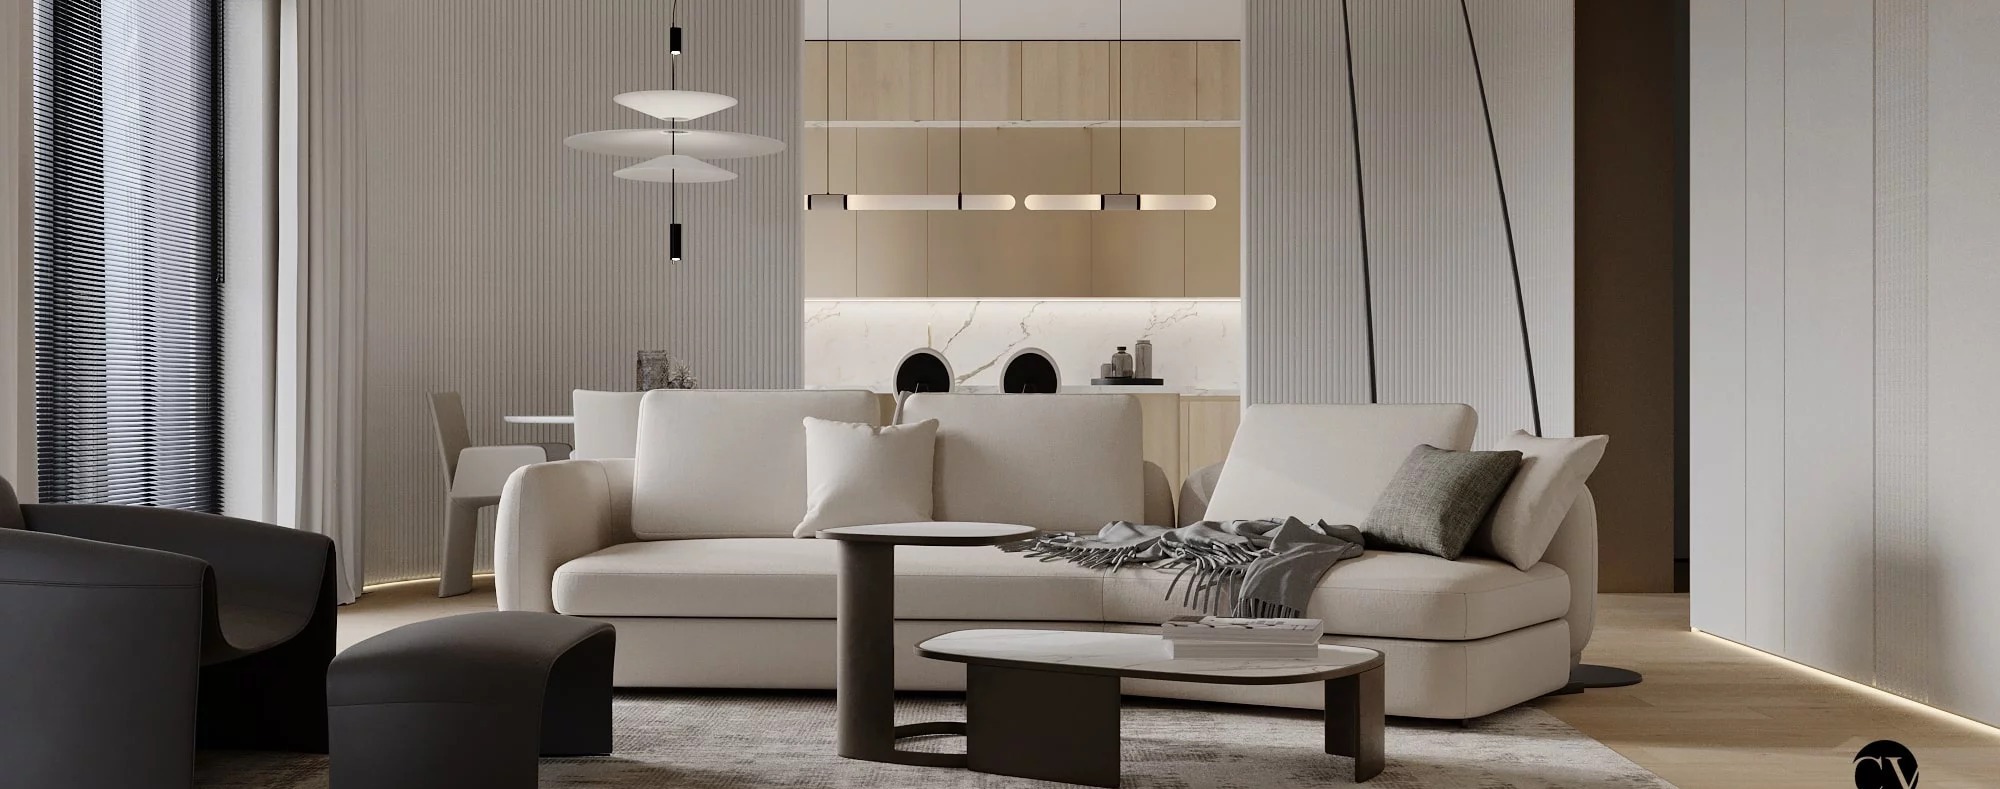 Interior design penthouse sofa